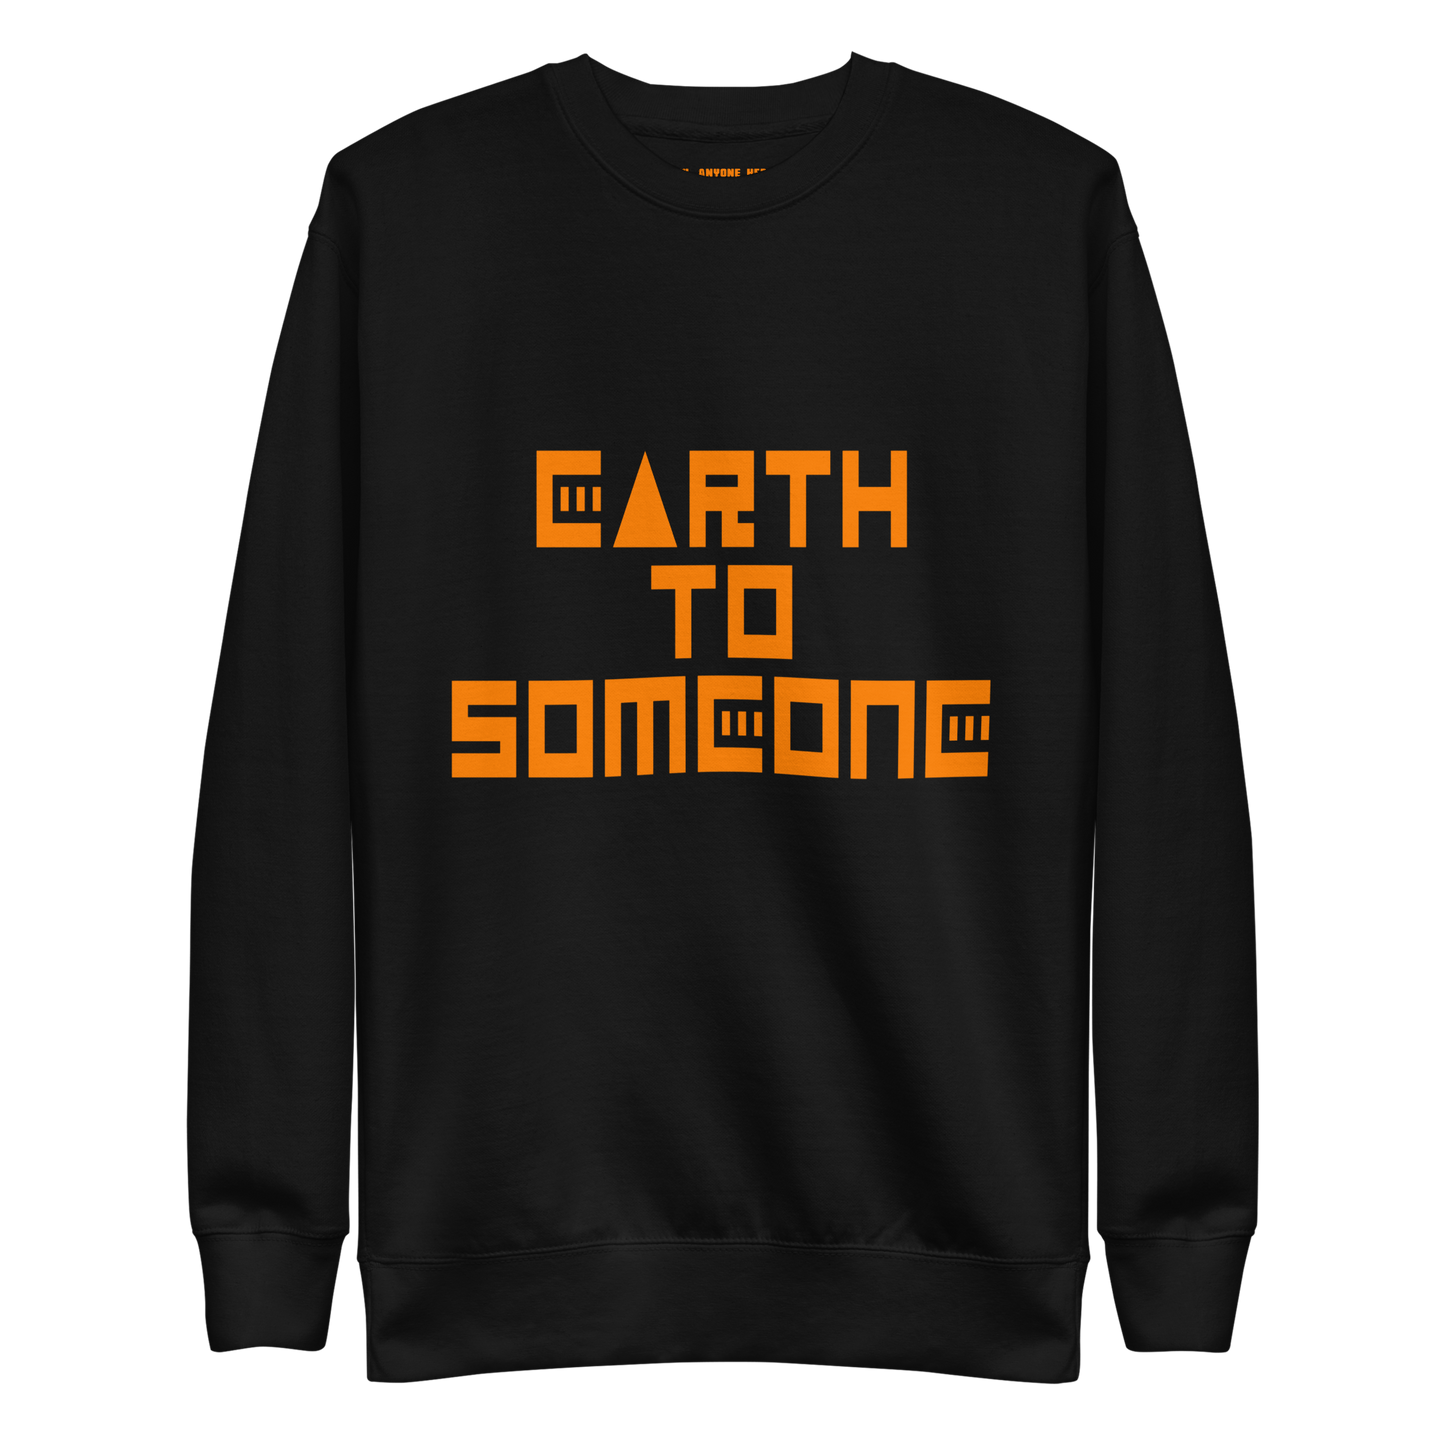 EARTH TO SONEONE sweatshirt